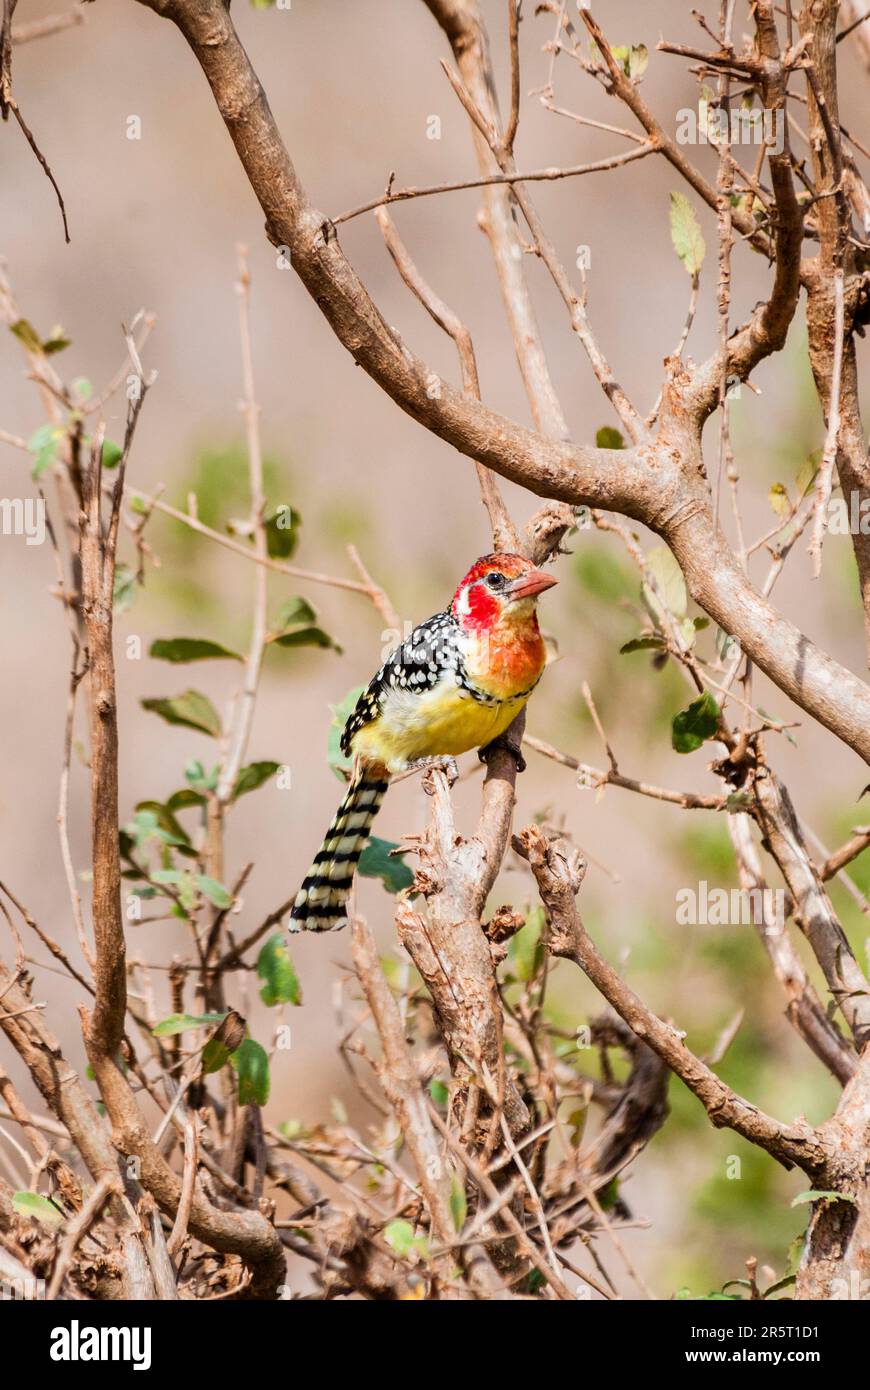 Kenya, Taita Hills Wildlife Sanctuary, Male Red-and-yellow barbet (Trachyphonus erythrocephalus) Stock Photo